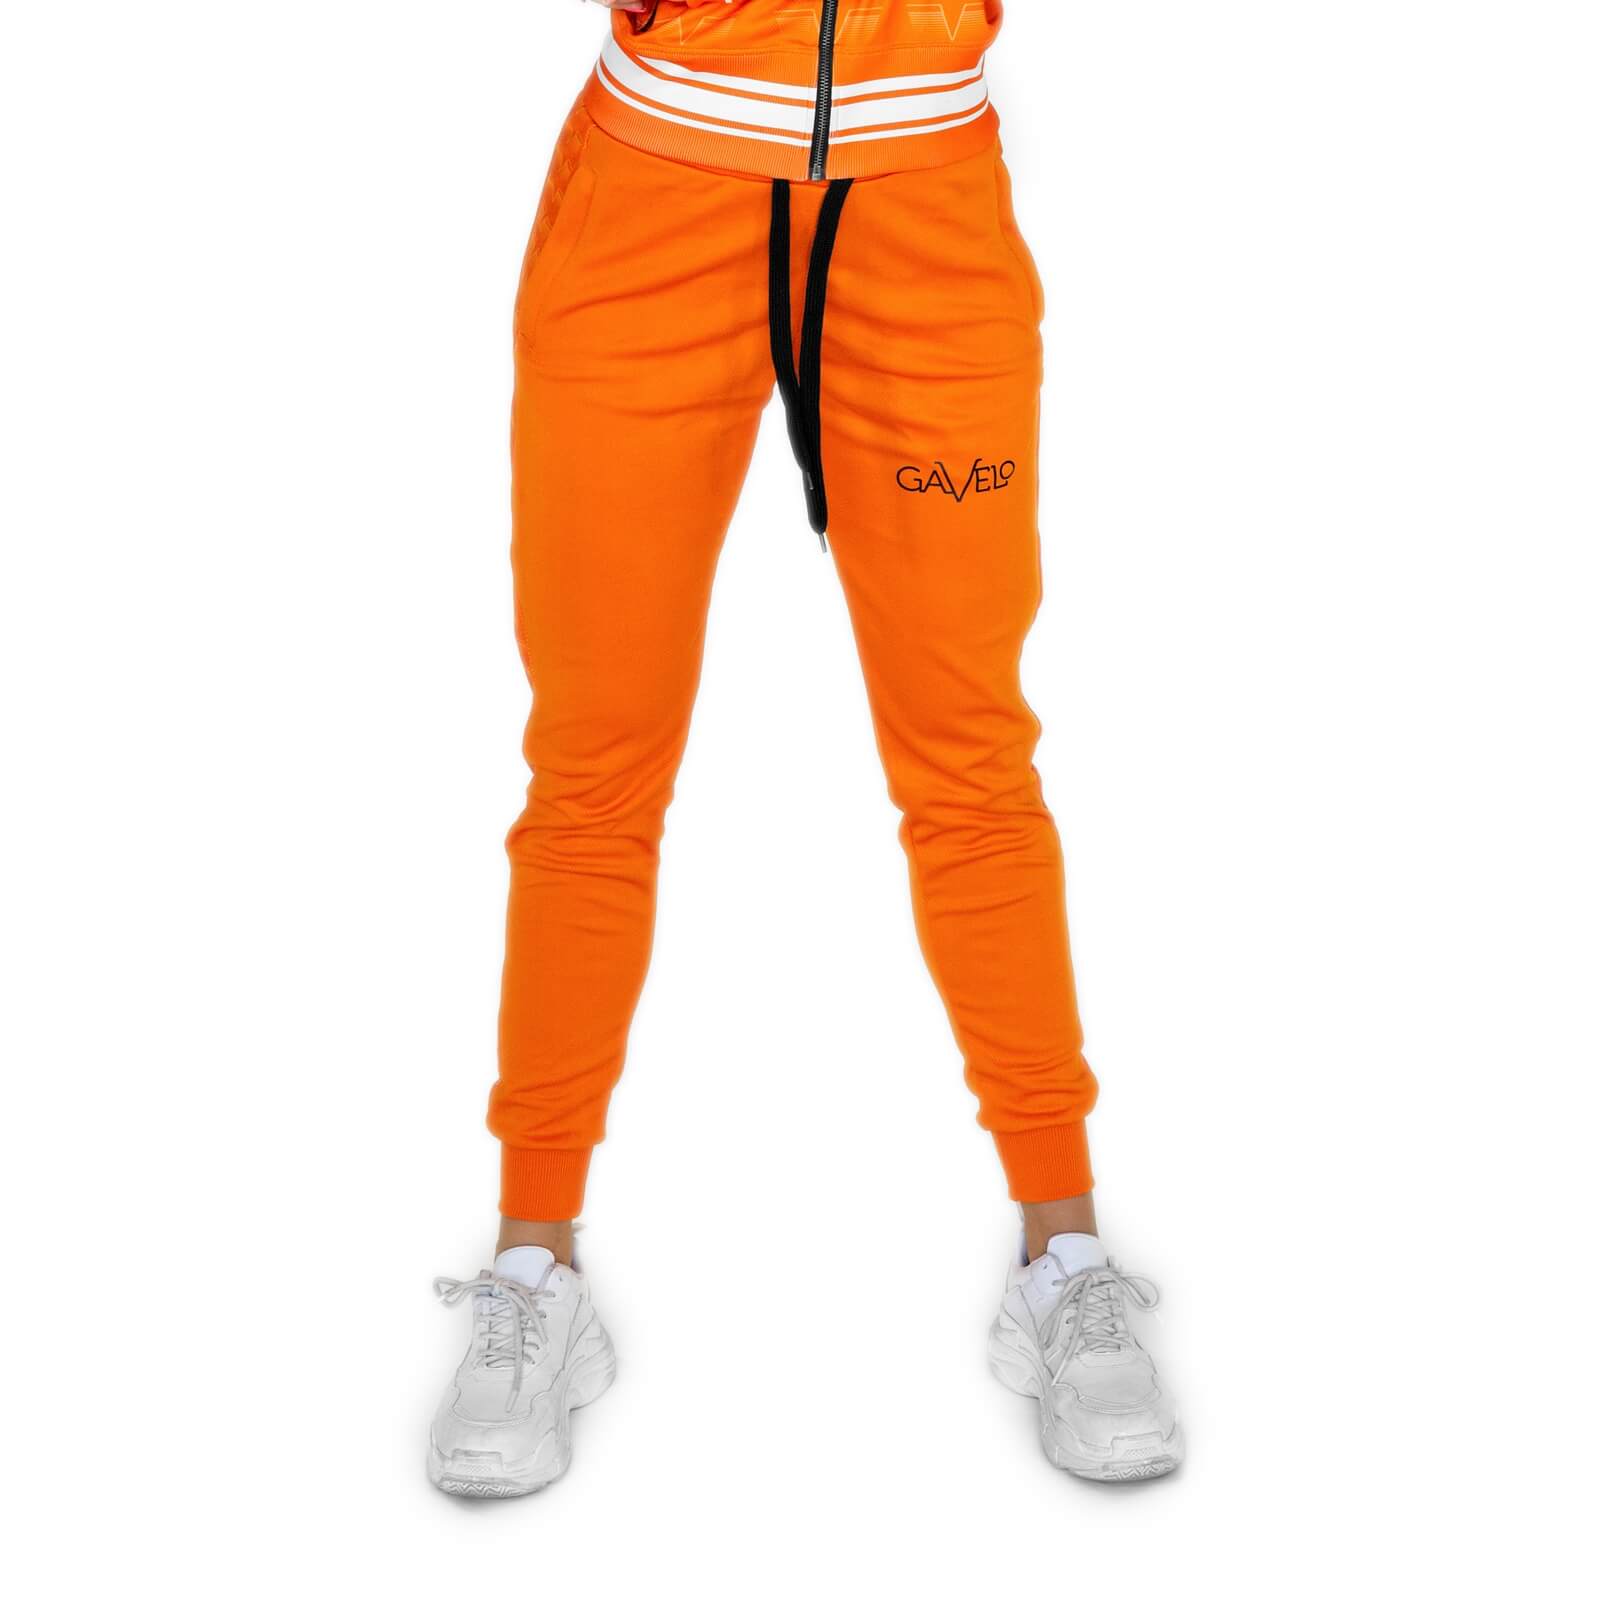 Kolla in Track Pants, orange, Gavelo hos SportGymButiken.se